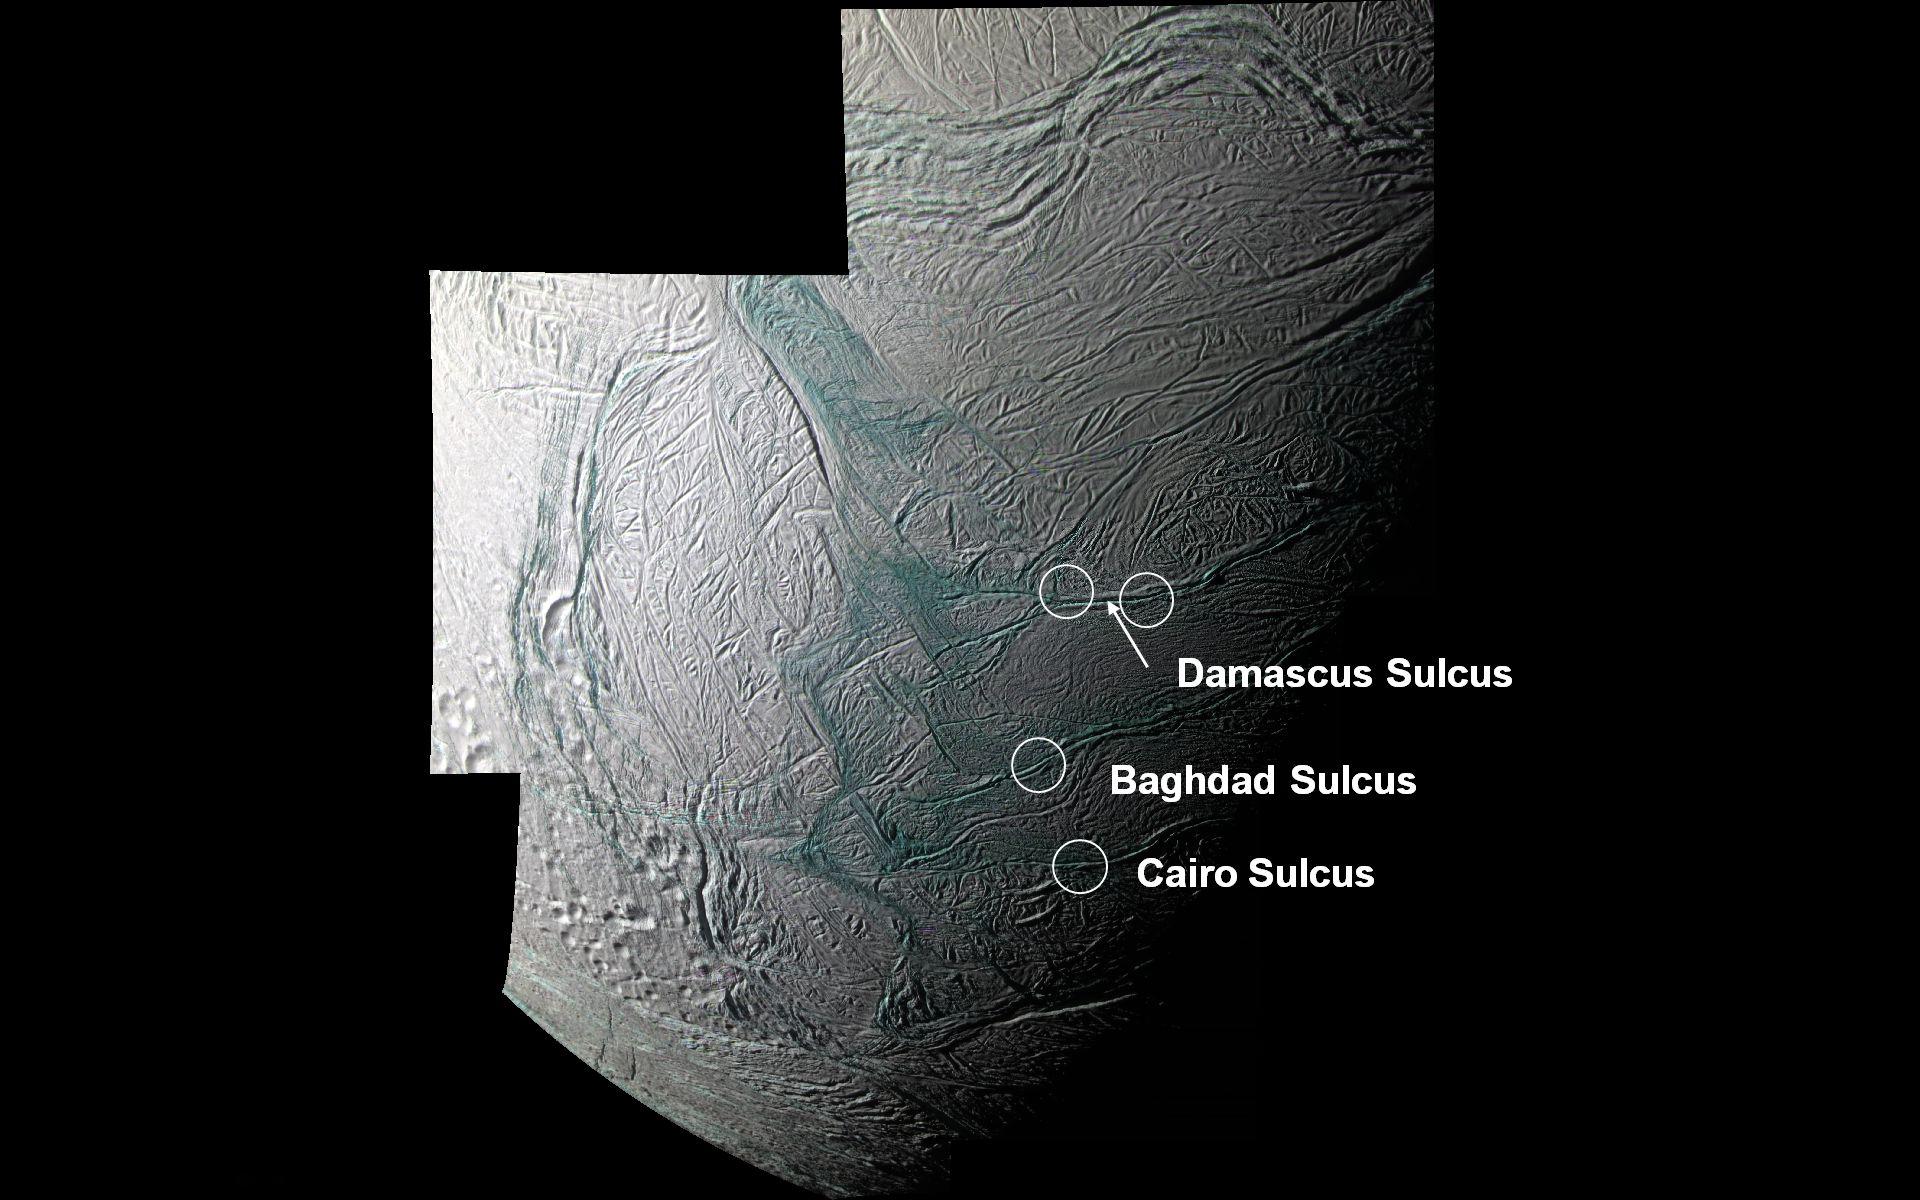 Enceladus with labels